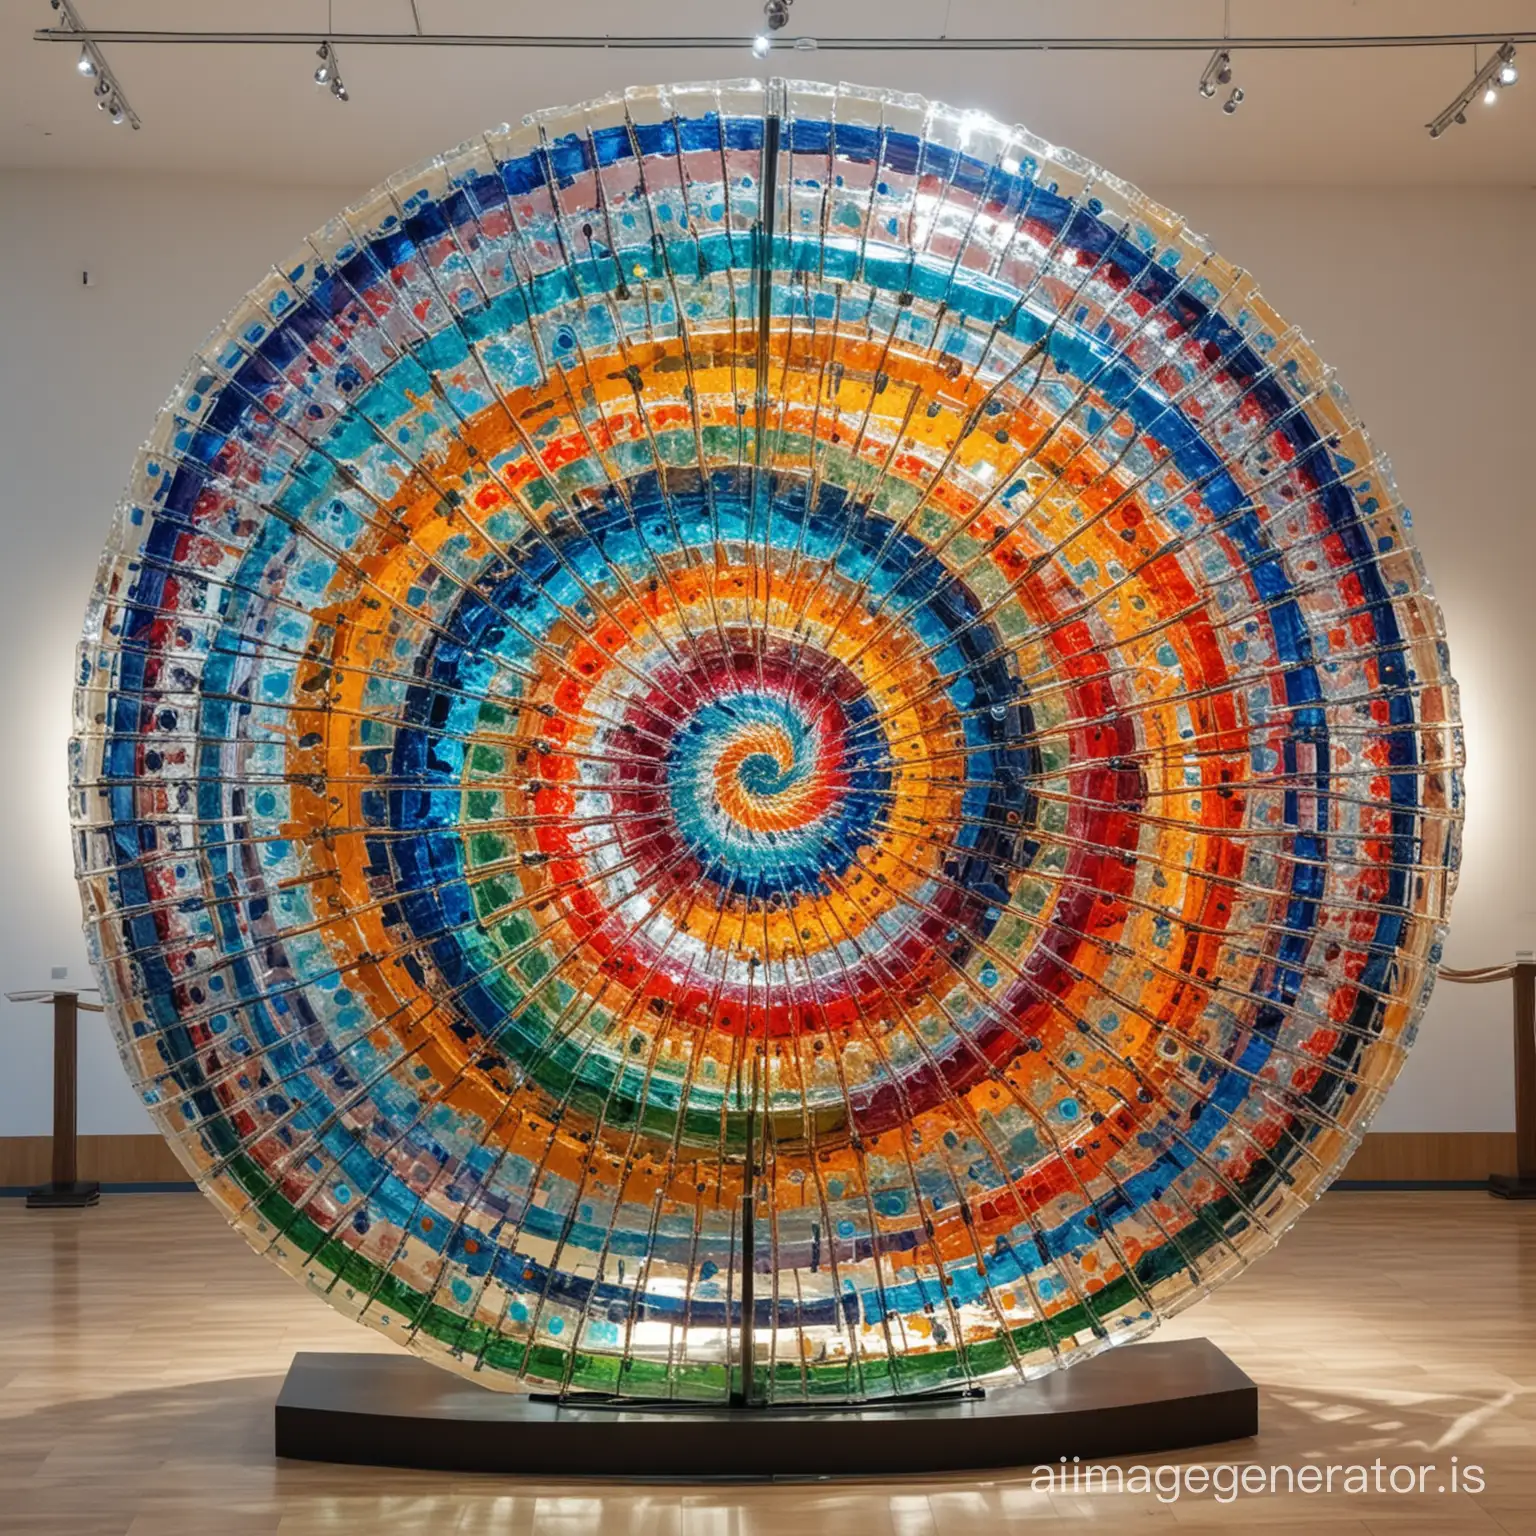 Colorful-Spiral-Mandala-Glass-Sculpture-in-Art-Gallery